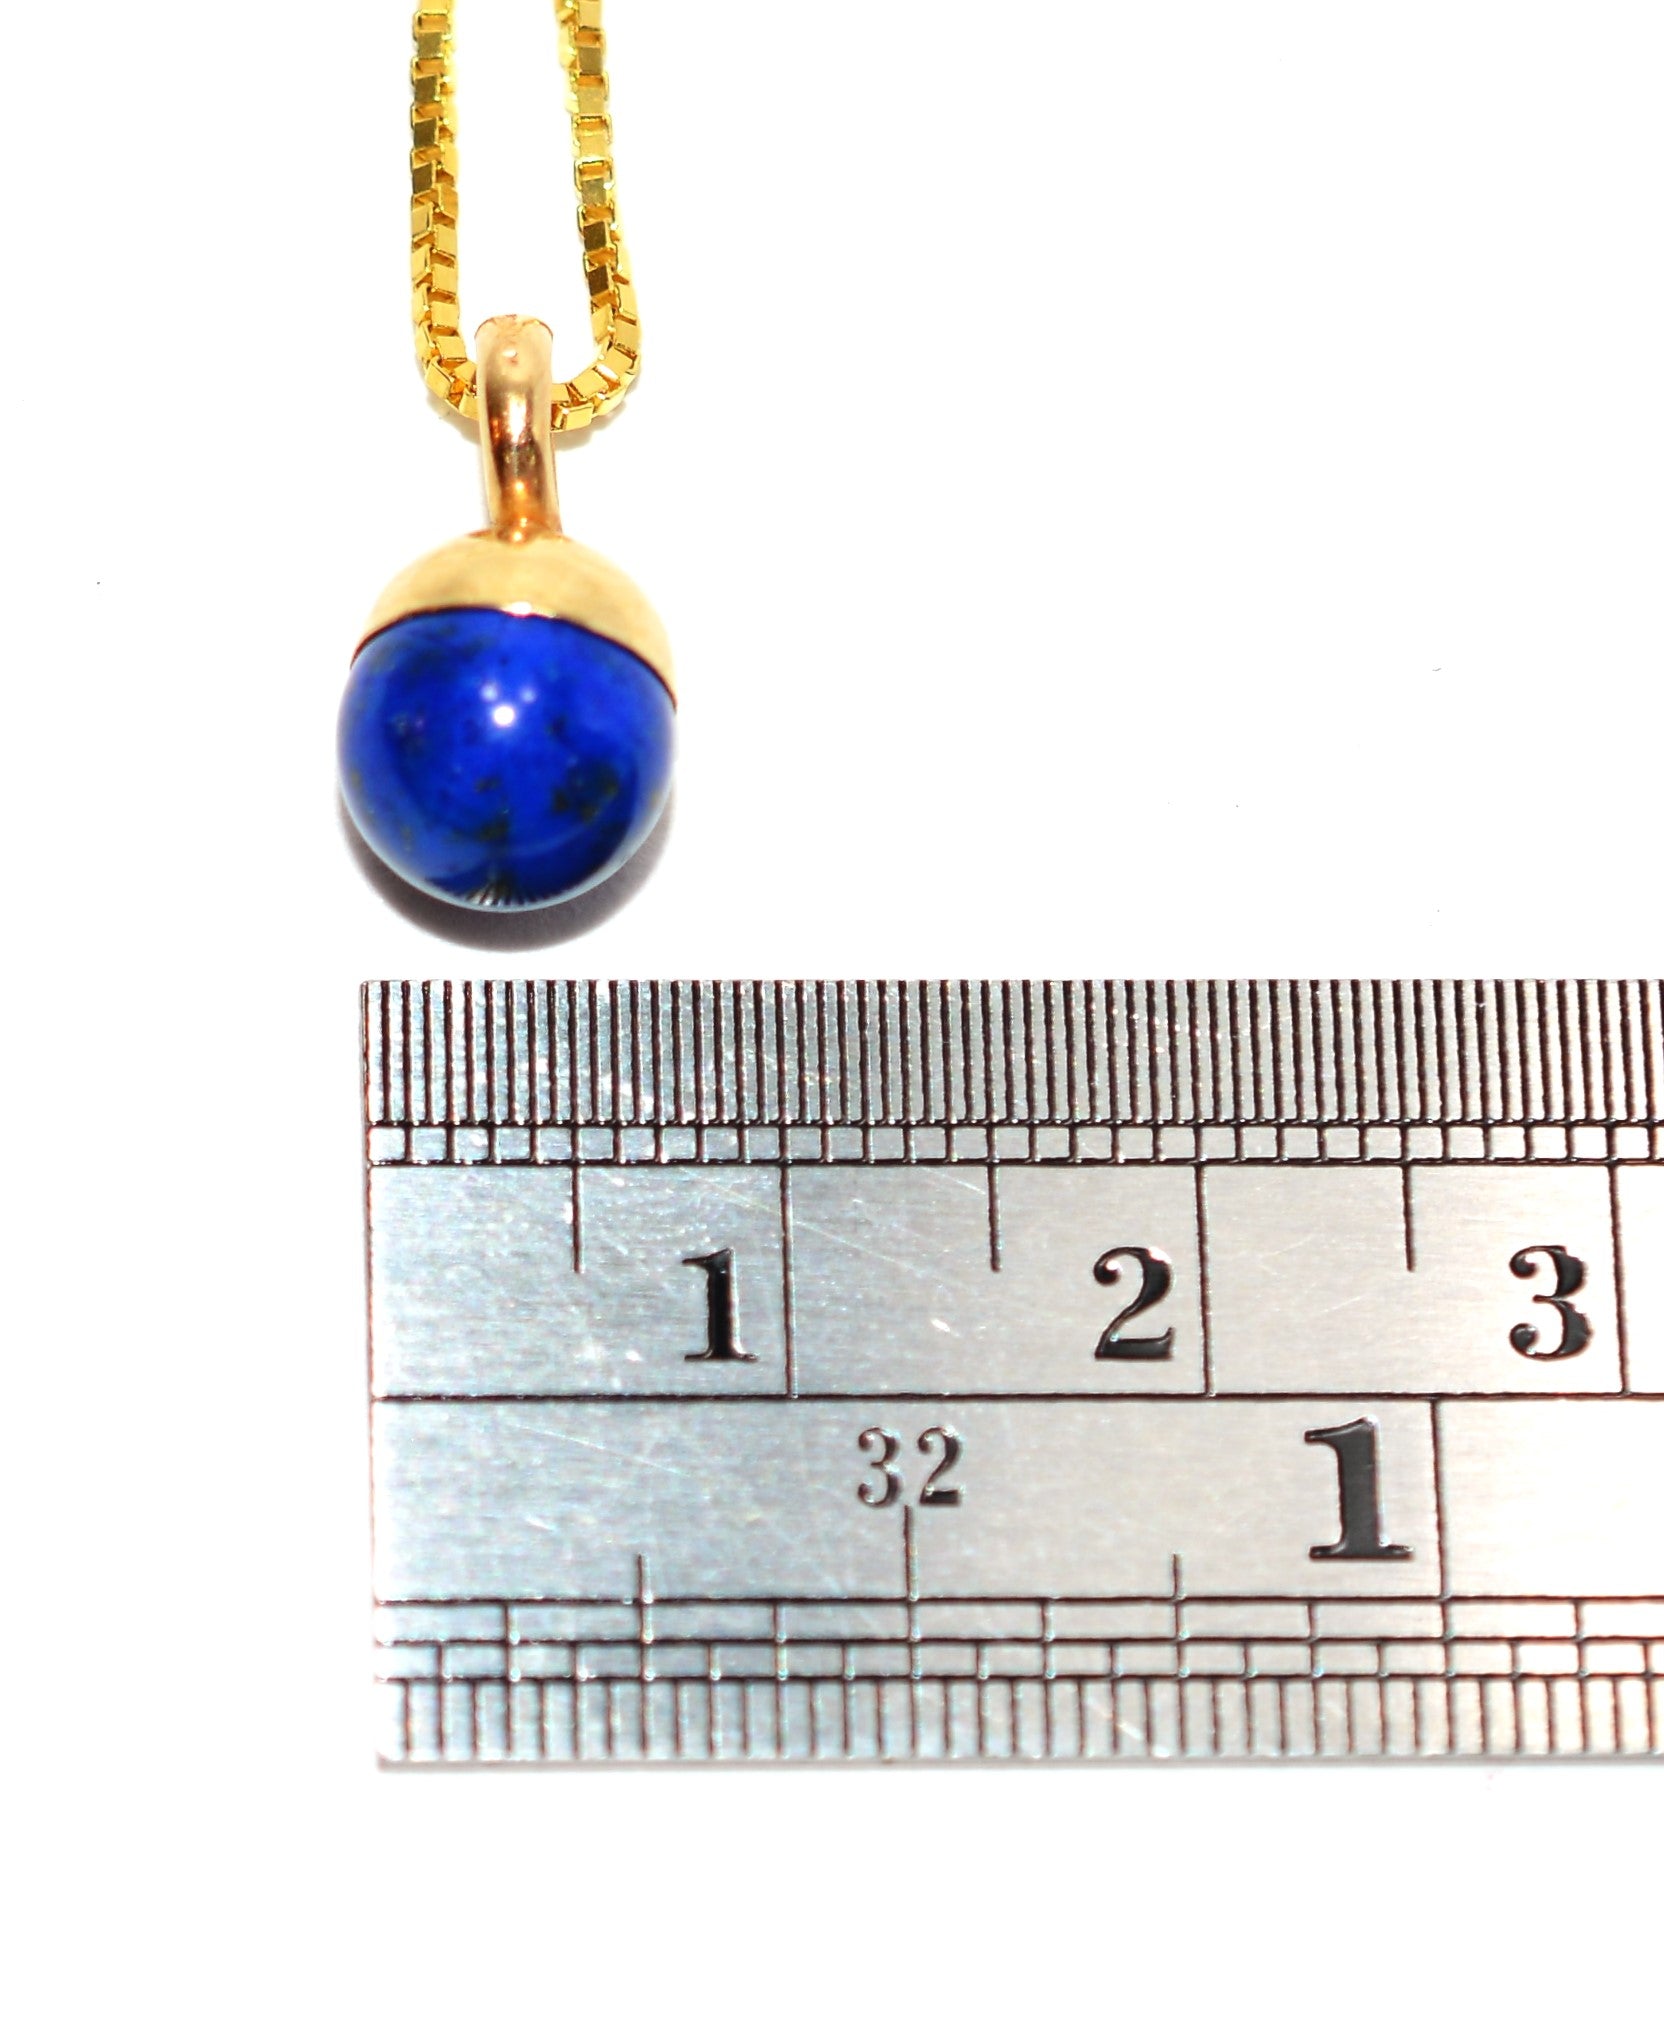 Natural Lapis Lazuli Necklace 14K Solid Gold Pendant Estate Jewellery Vintage Necklace Ladies Womens Fine Birthstone Blue Gemstone Solitaire